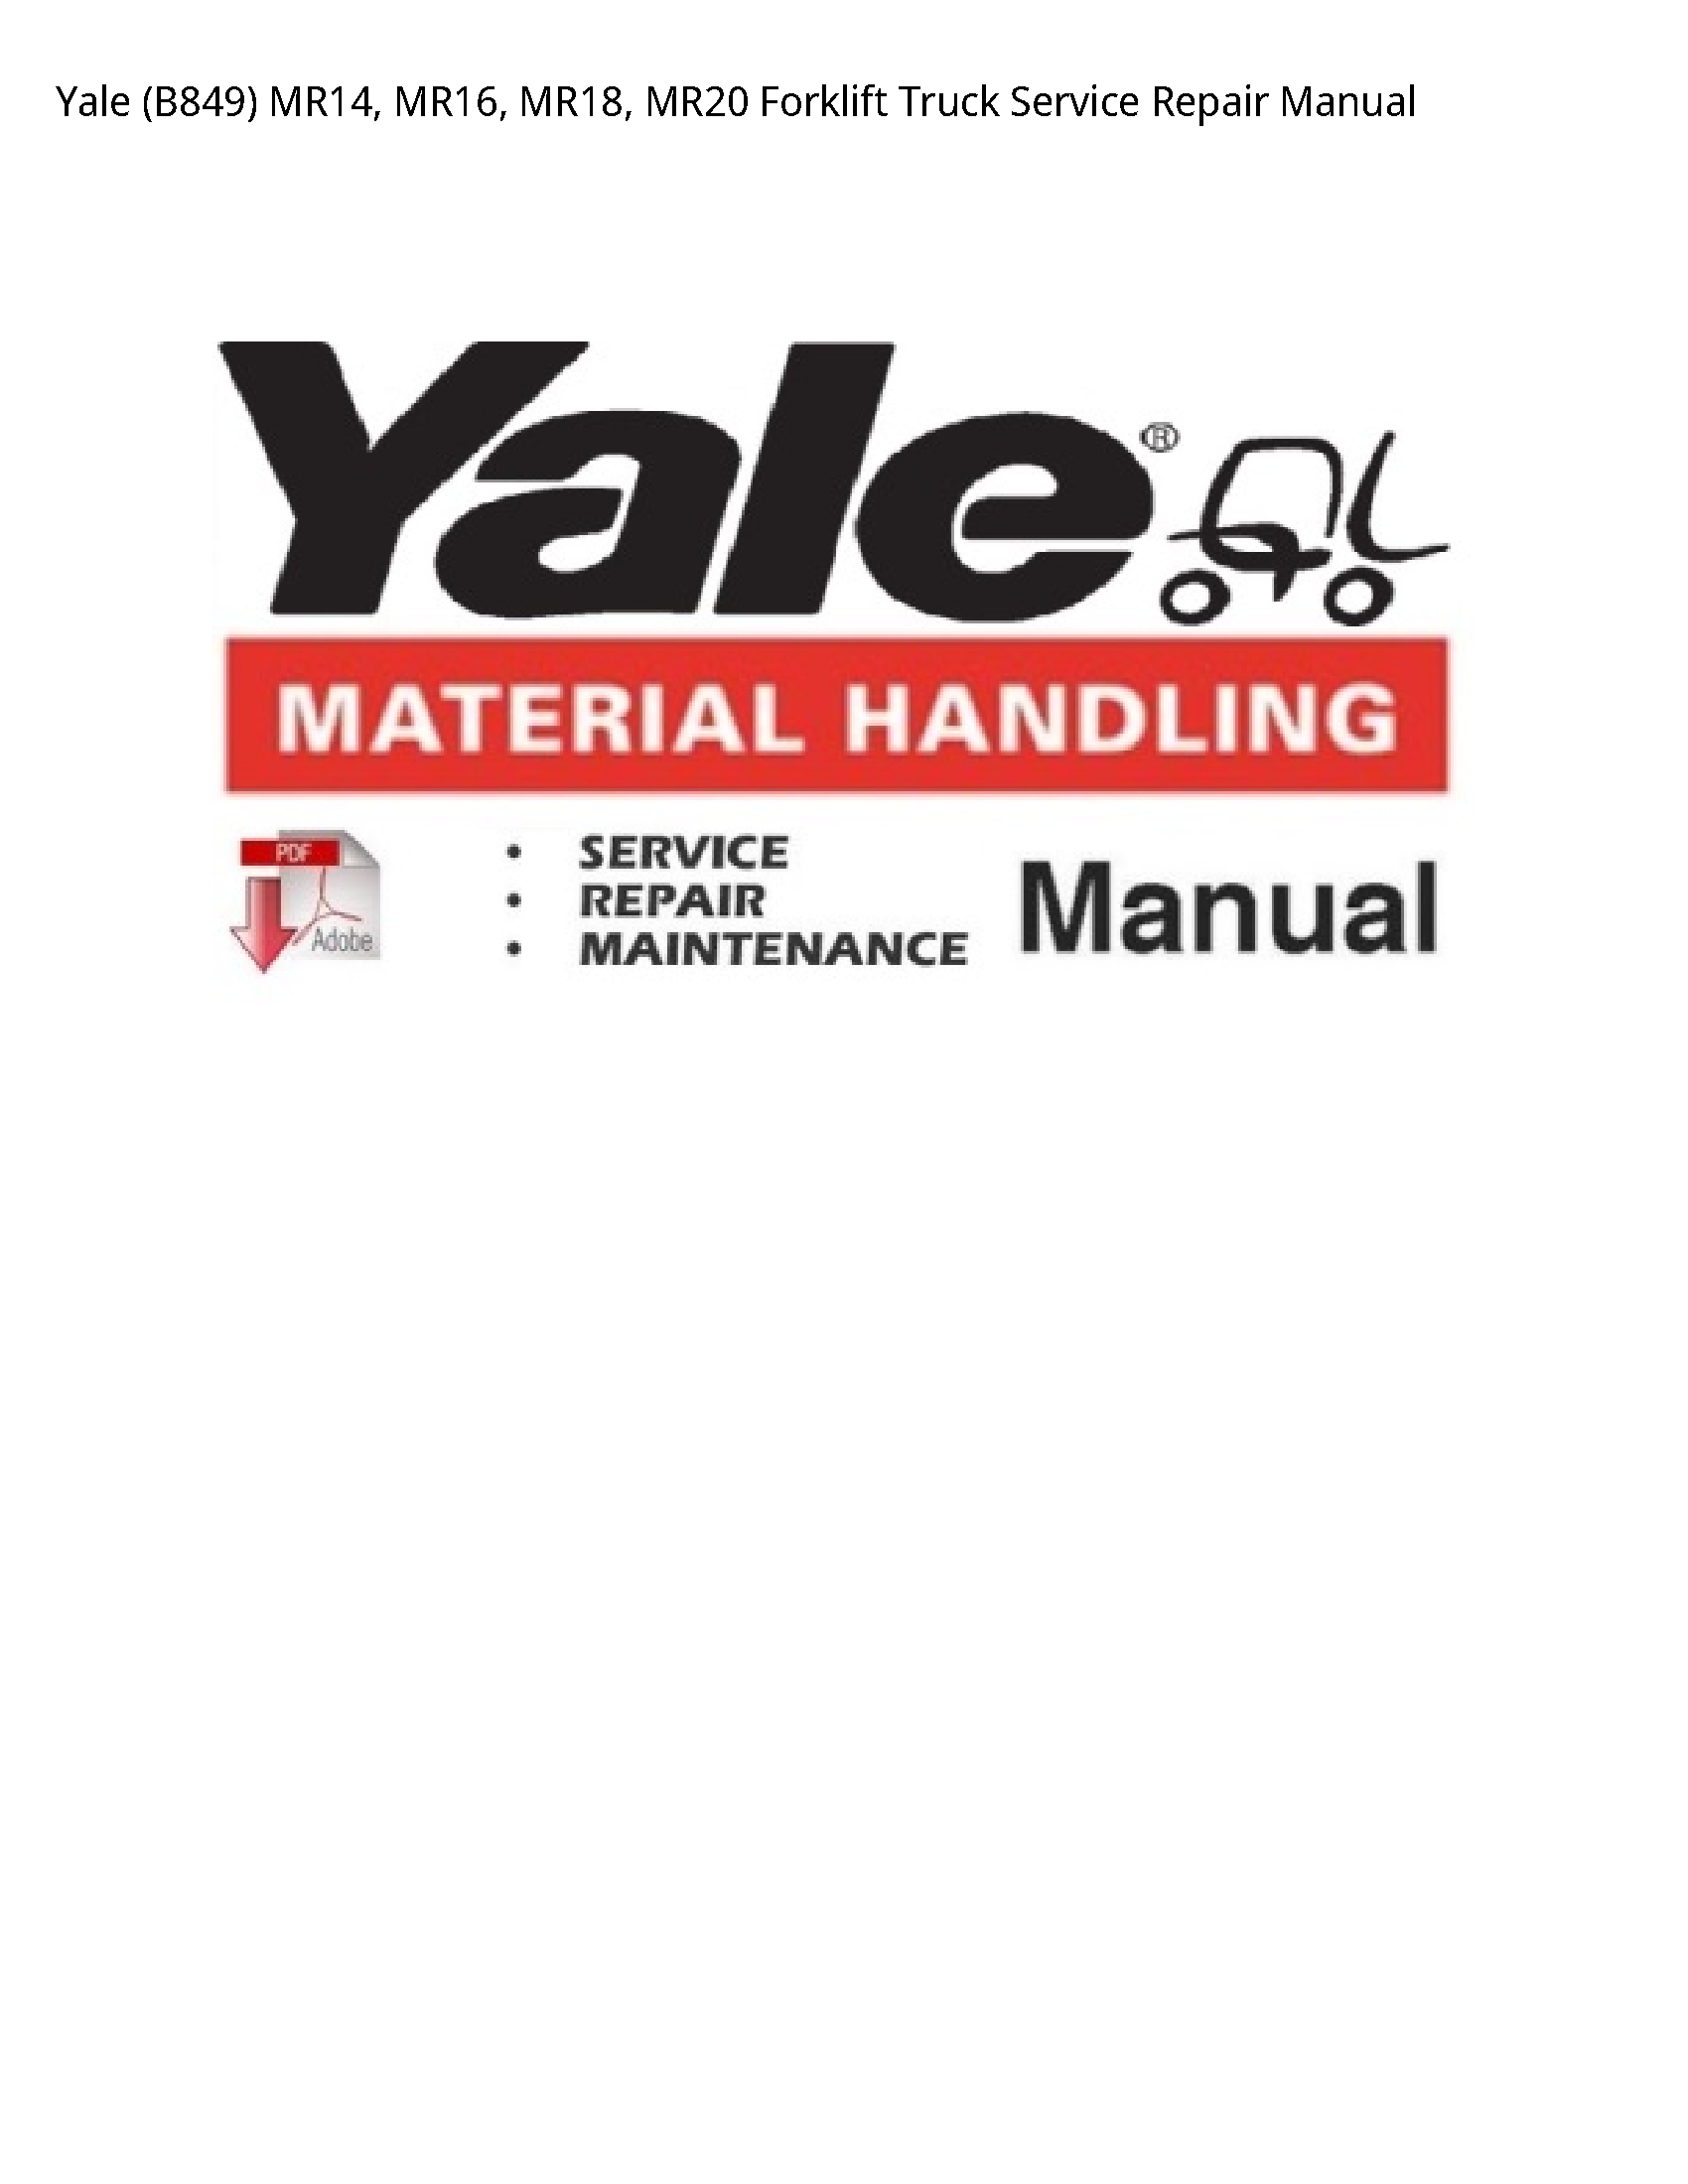 Yale (B849) Forklift Truck manual